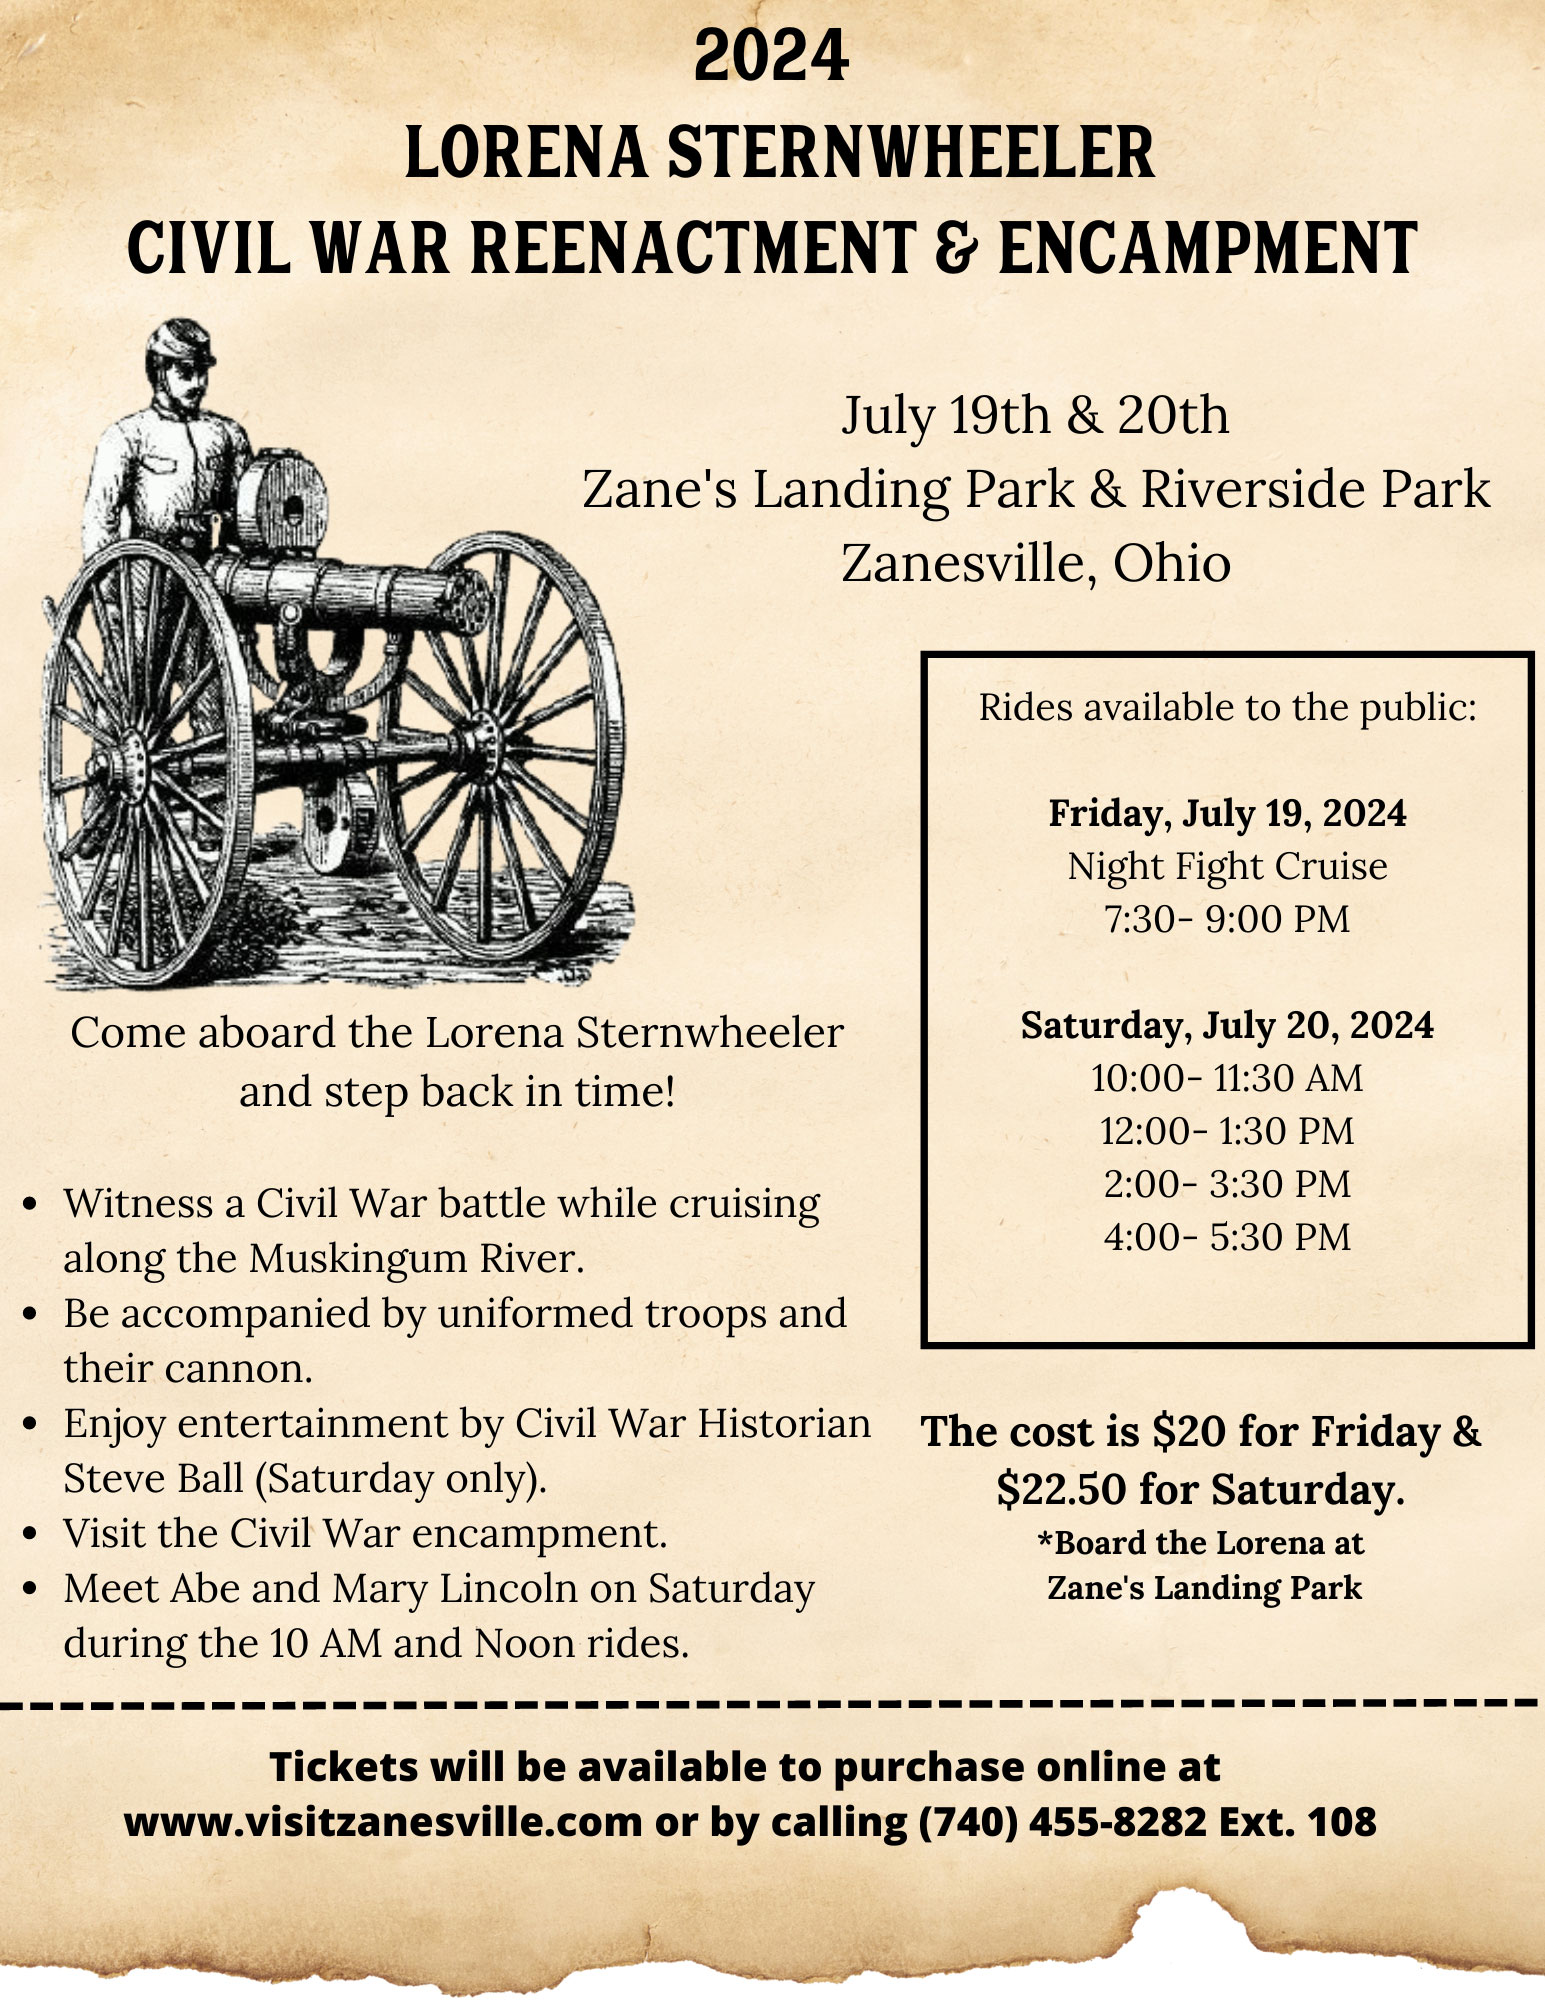 Lorena Sterwheeler Civil War Encampment